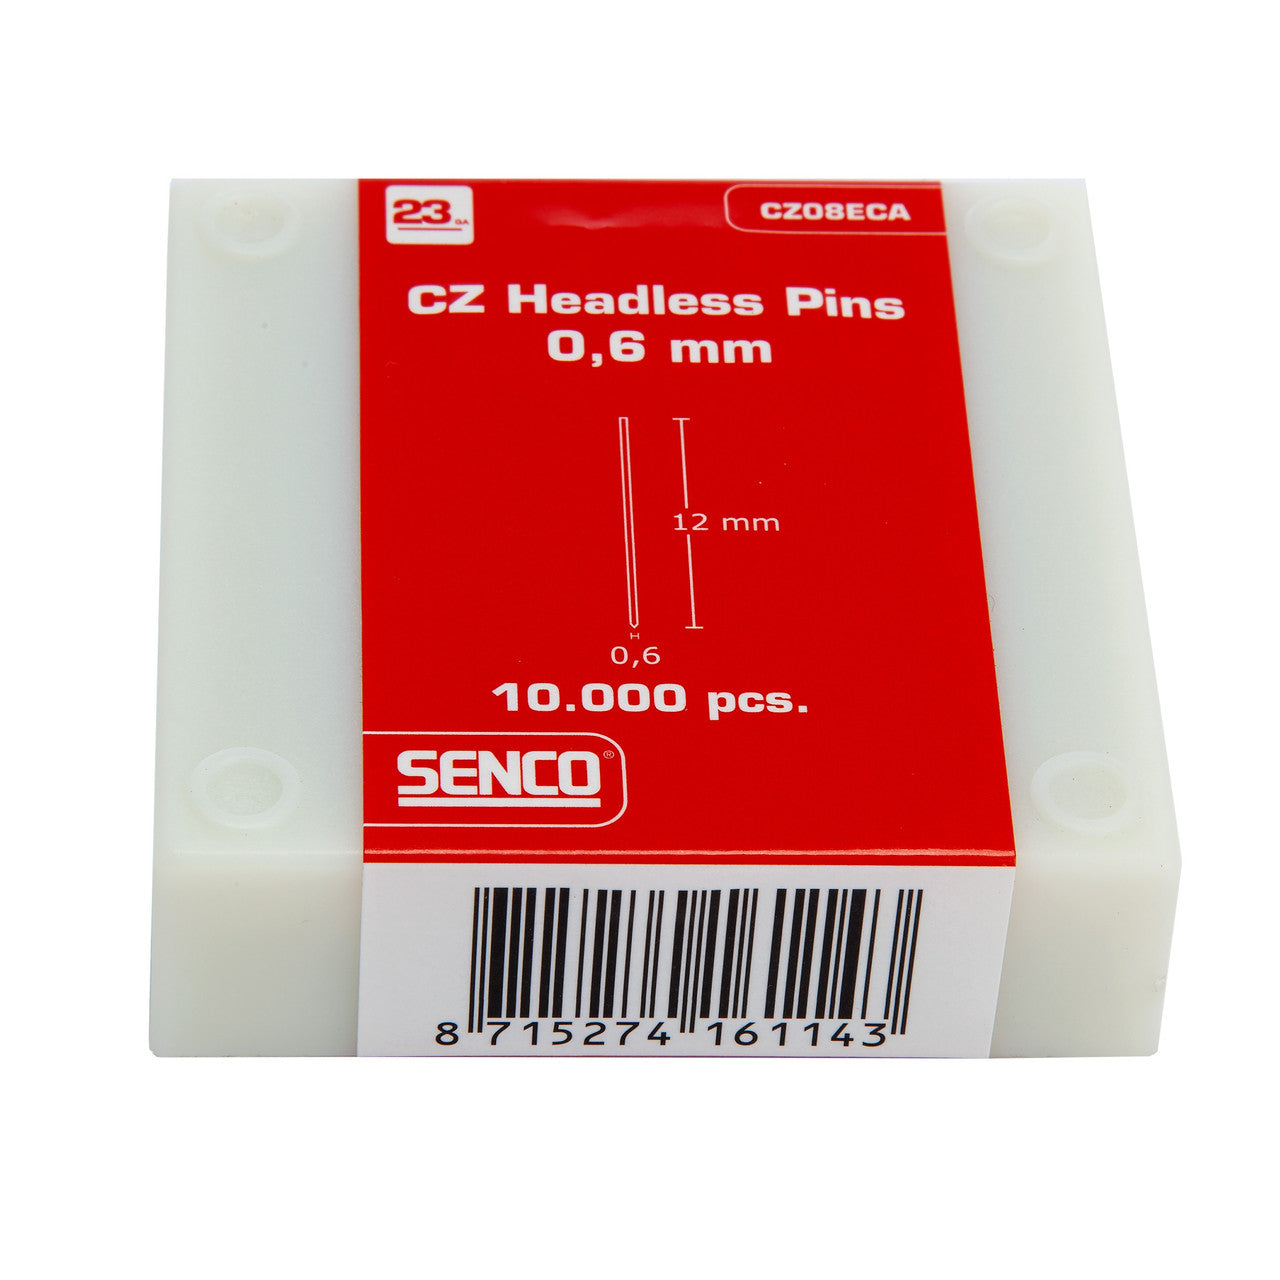 Senco CZ08ECA Galvanised Collated CZ Headless Pins 23 Gauge 0.6mm x 12mm (10,000 in Box)